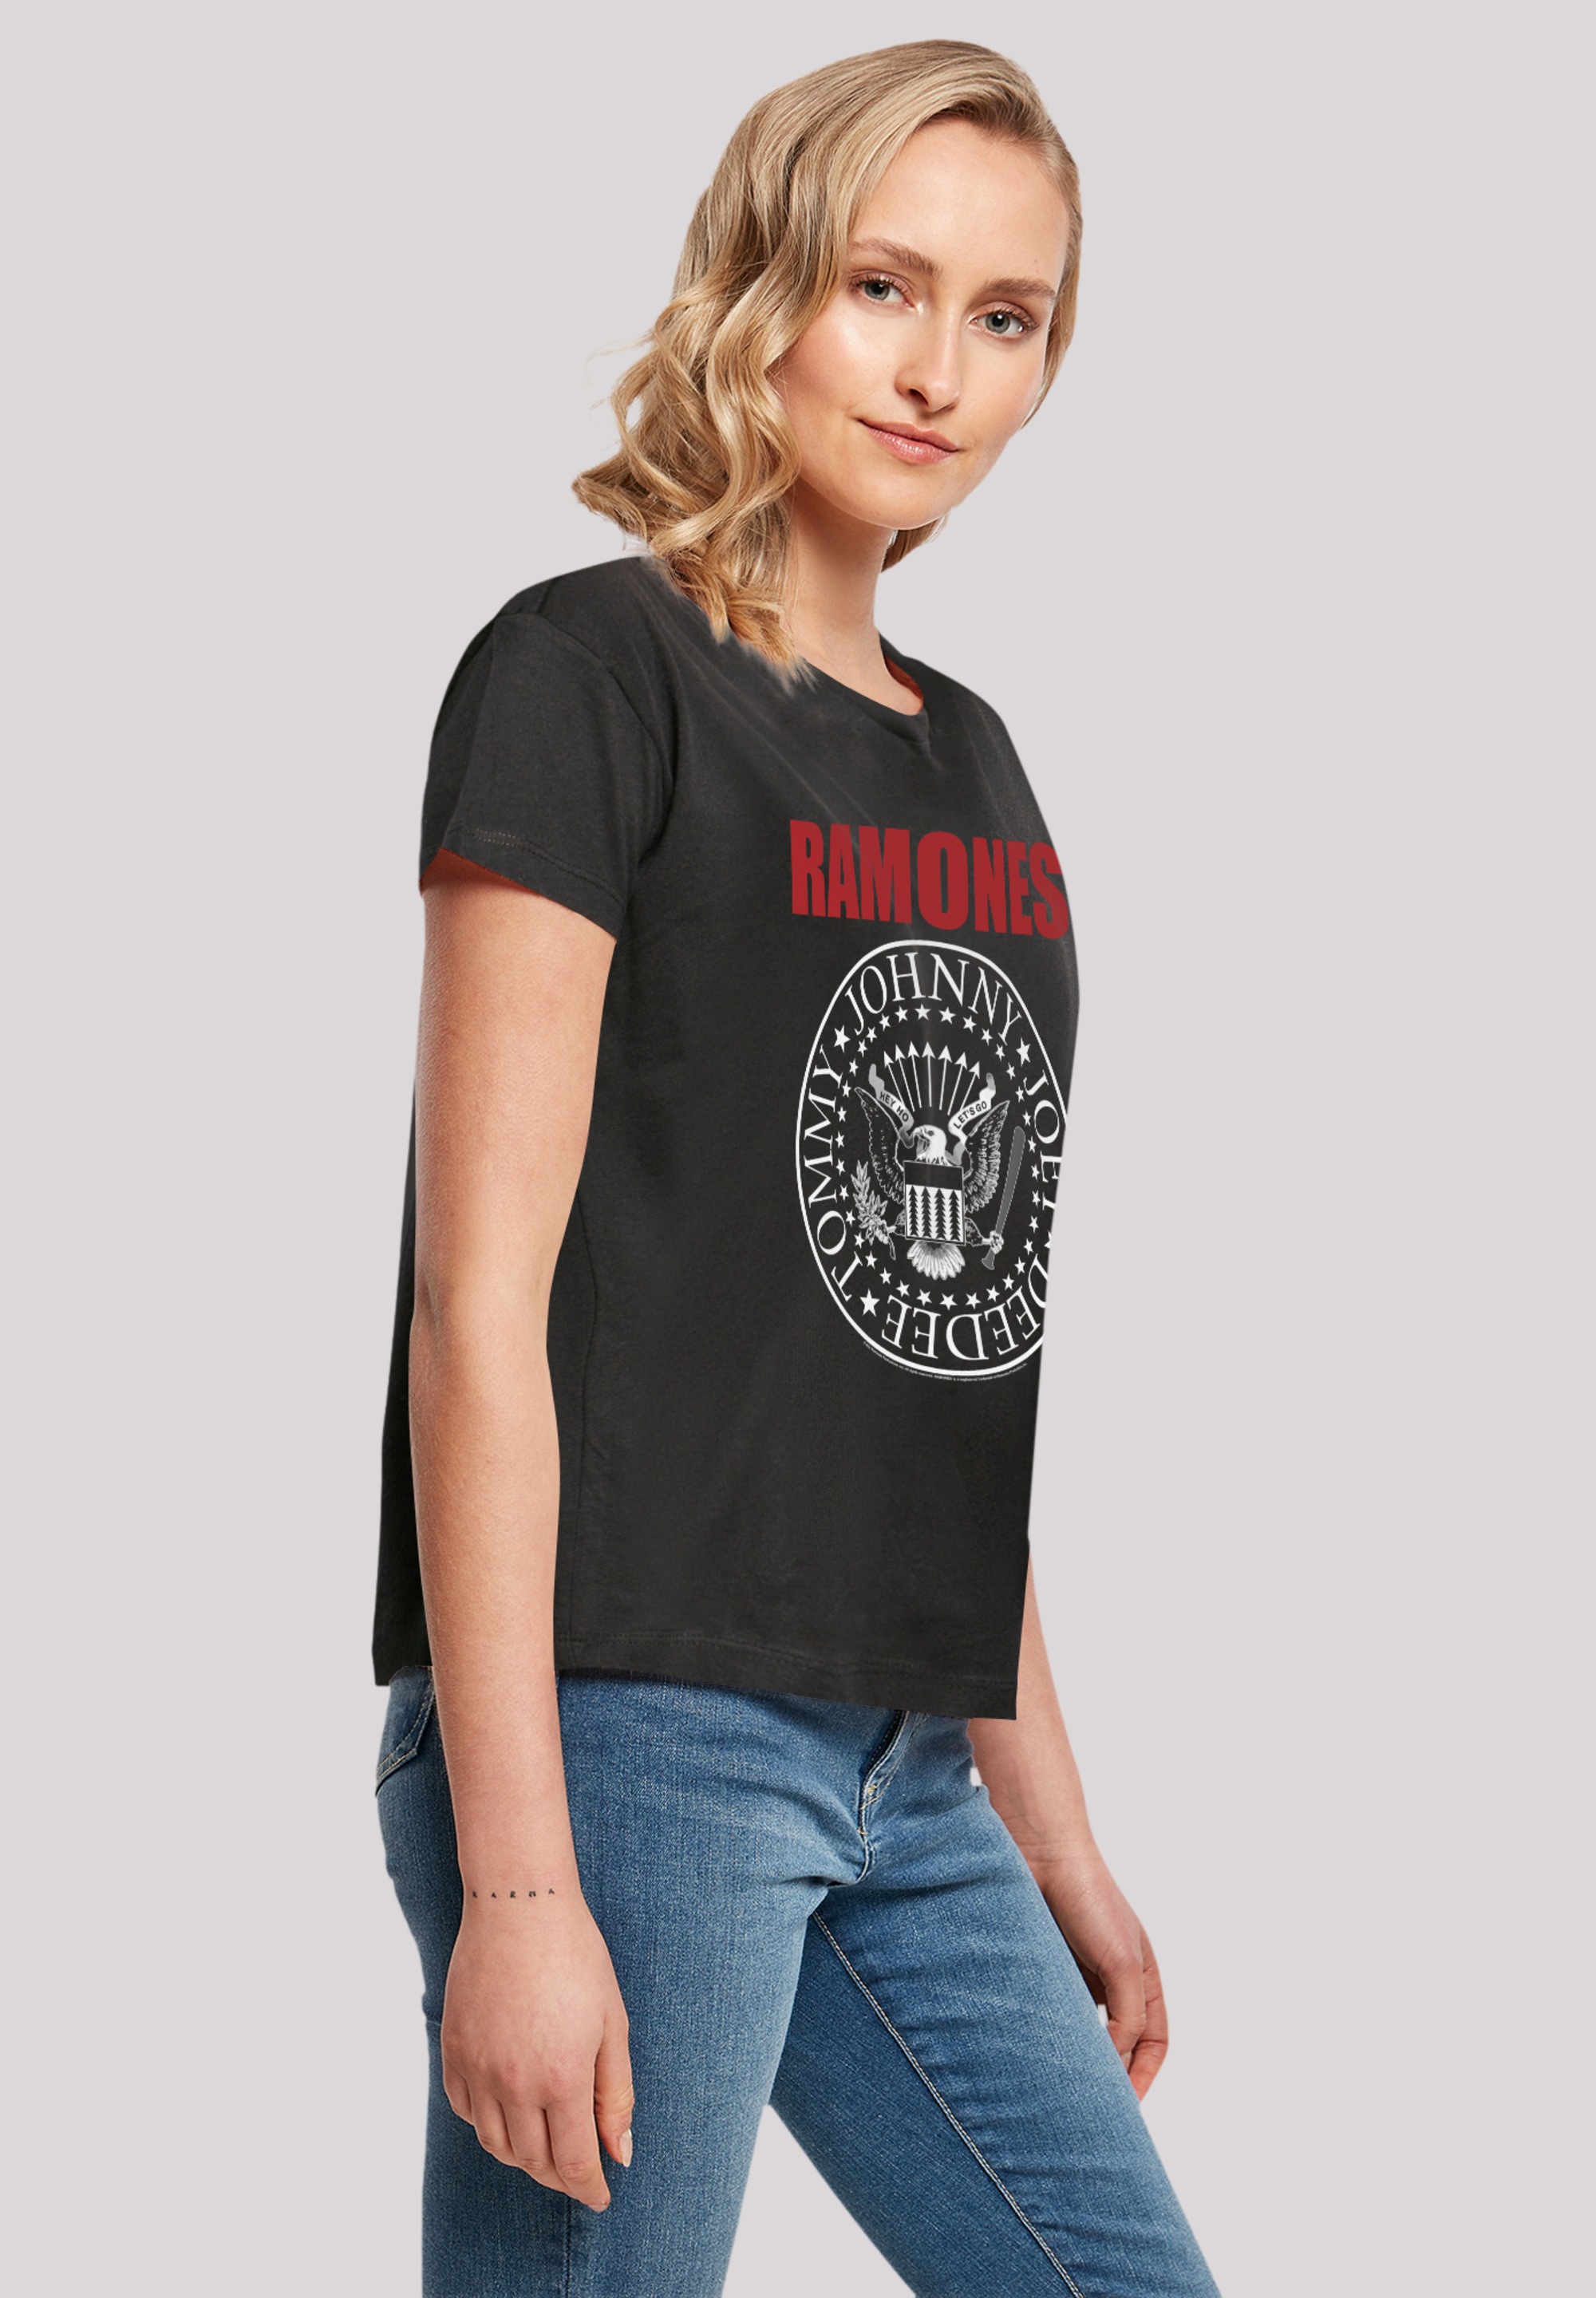 Red walking Premium Rock T-Shirt Text Qualität, Seal«, Band, | kaufen »Ramones Band F4NT4STIC I\'m online Rock-Musik Musik